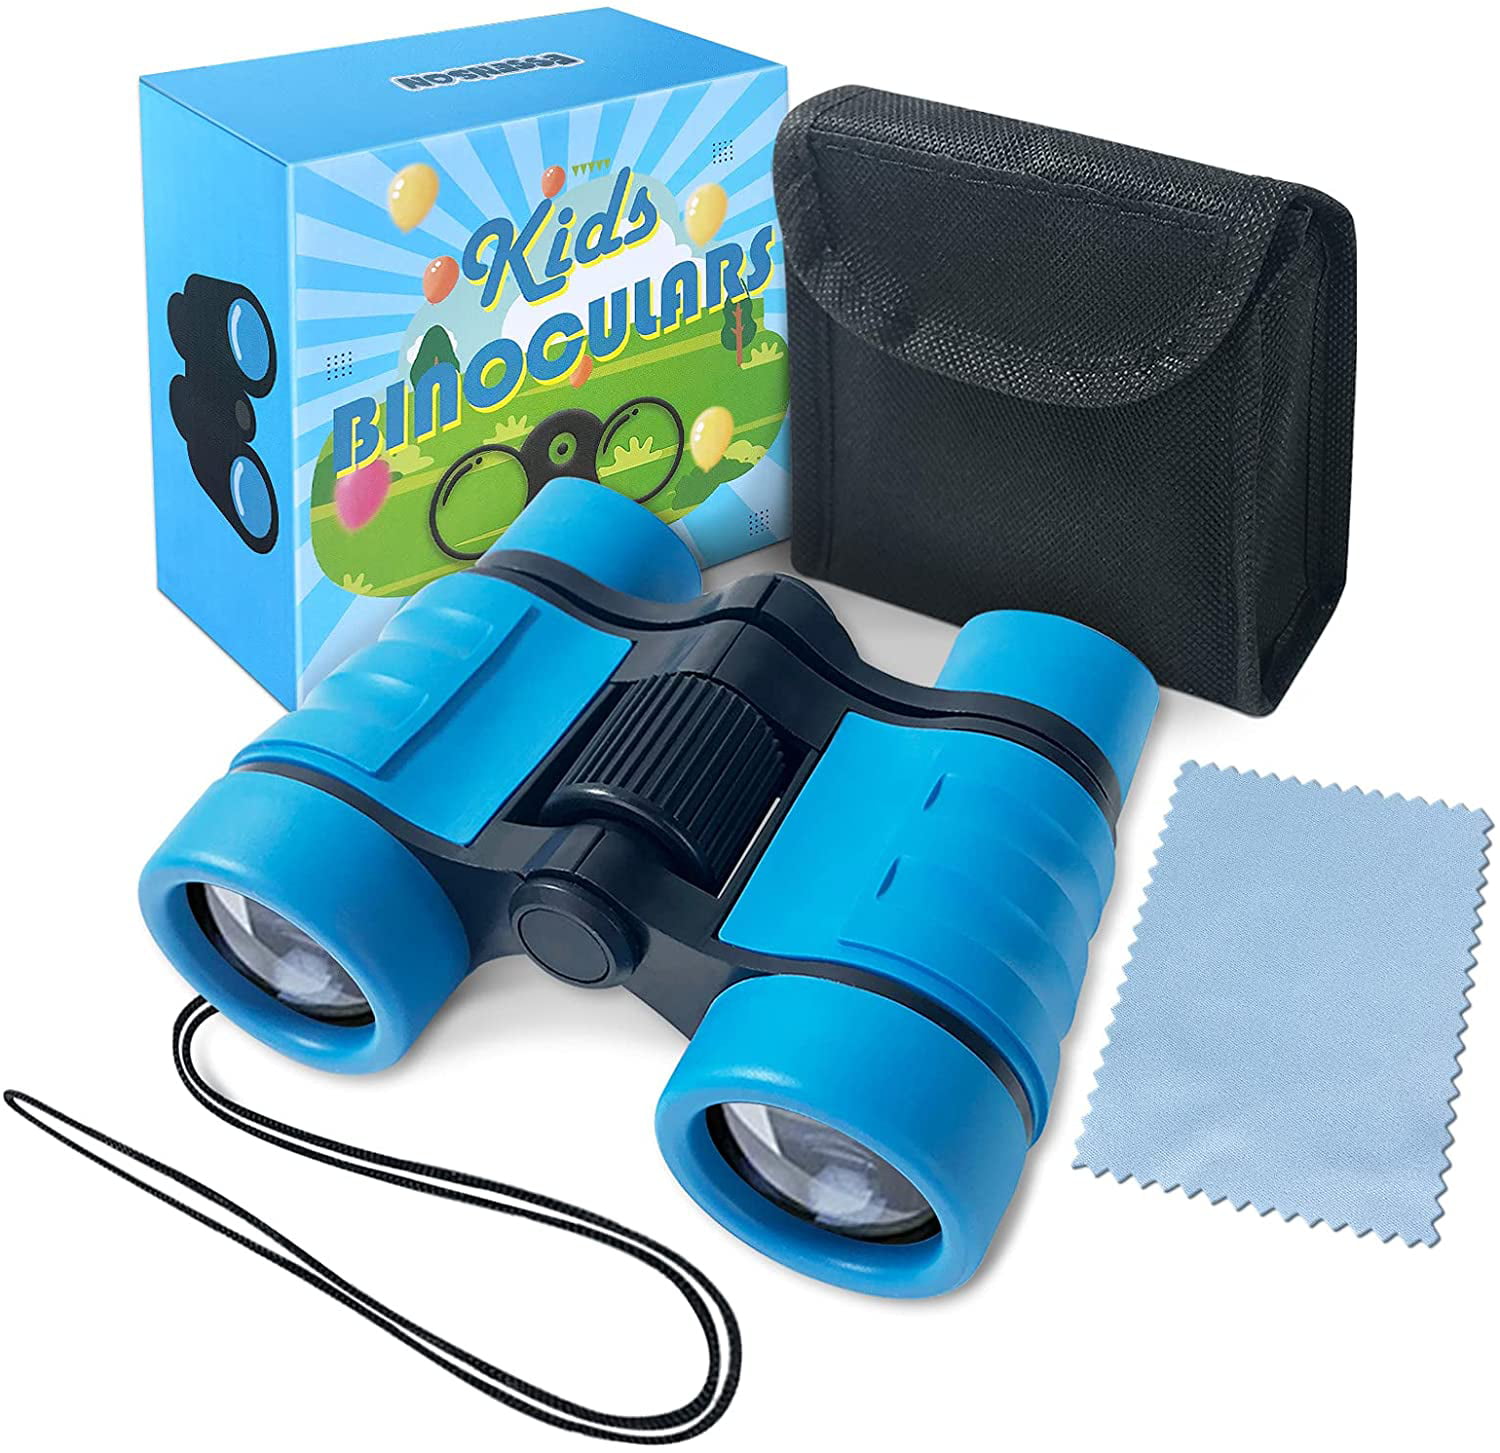 Black-1 Kids Telescopes Handheld Toys Binoculars Fun Cool Learning Exploring Educational Toy Birthday Gift for Kids Boys Girls 